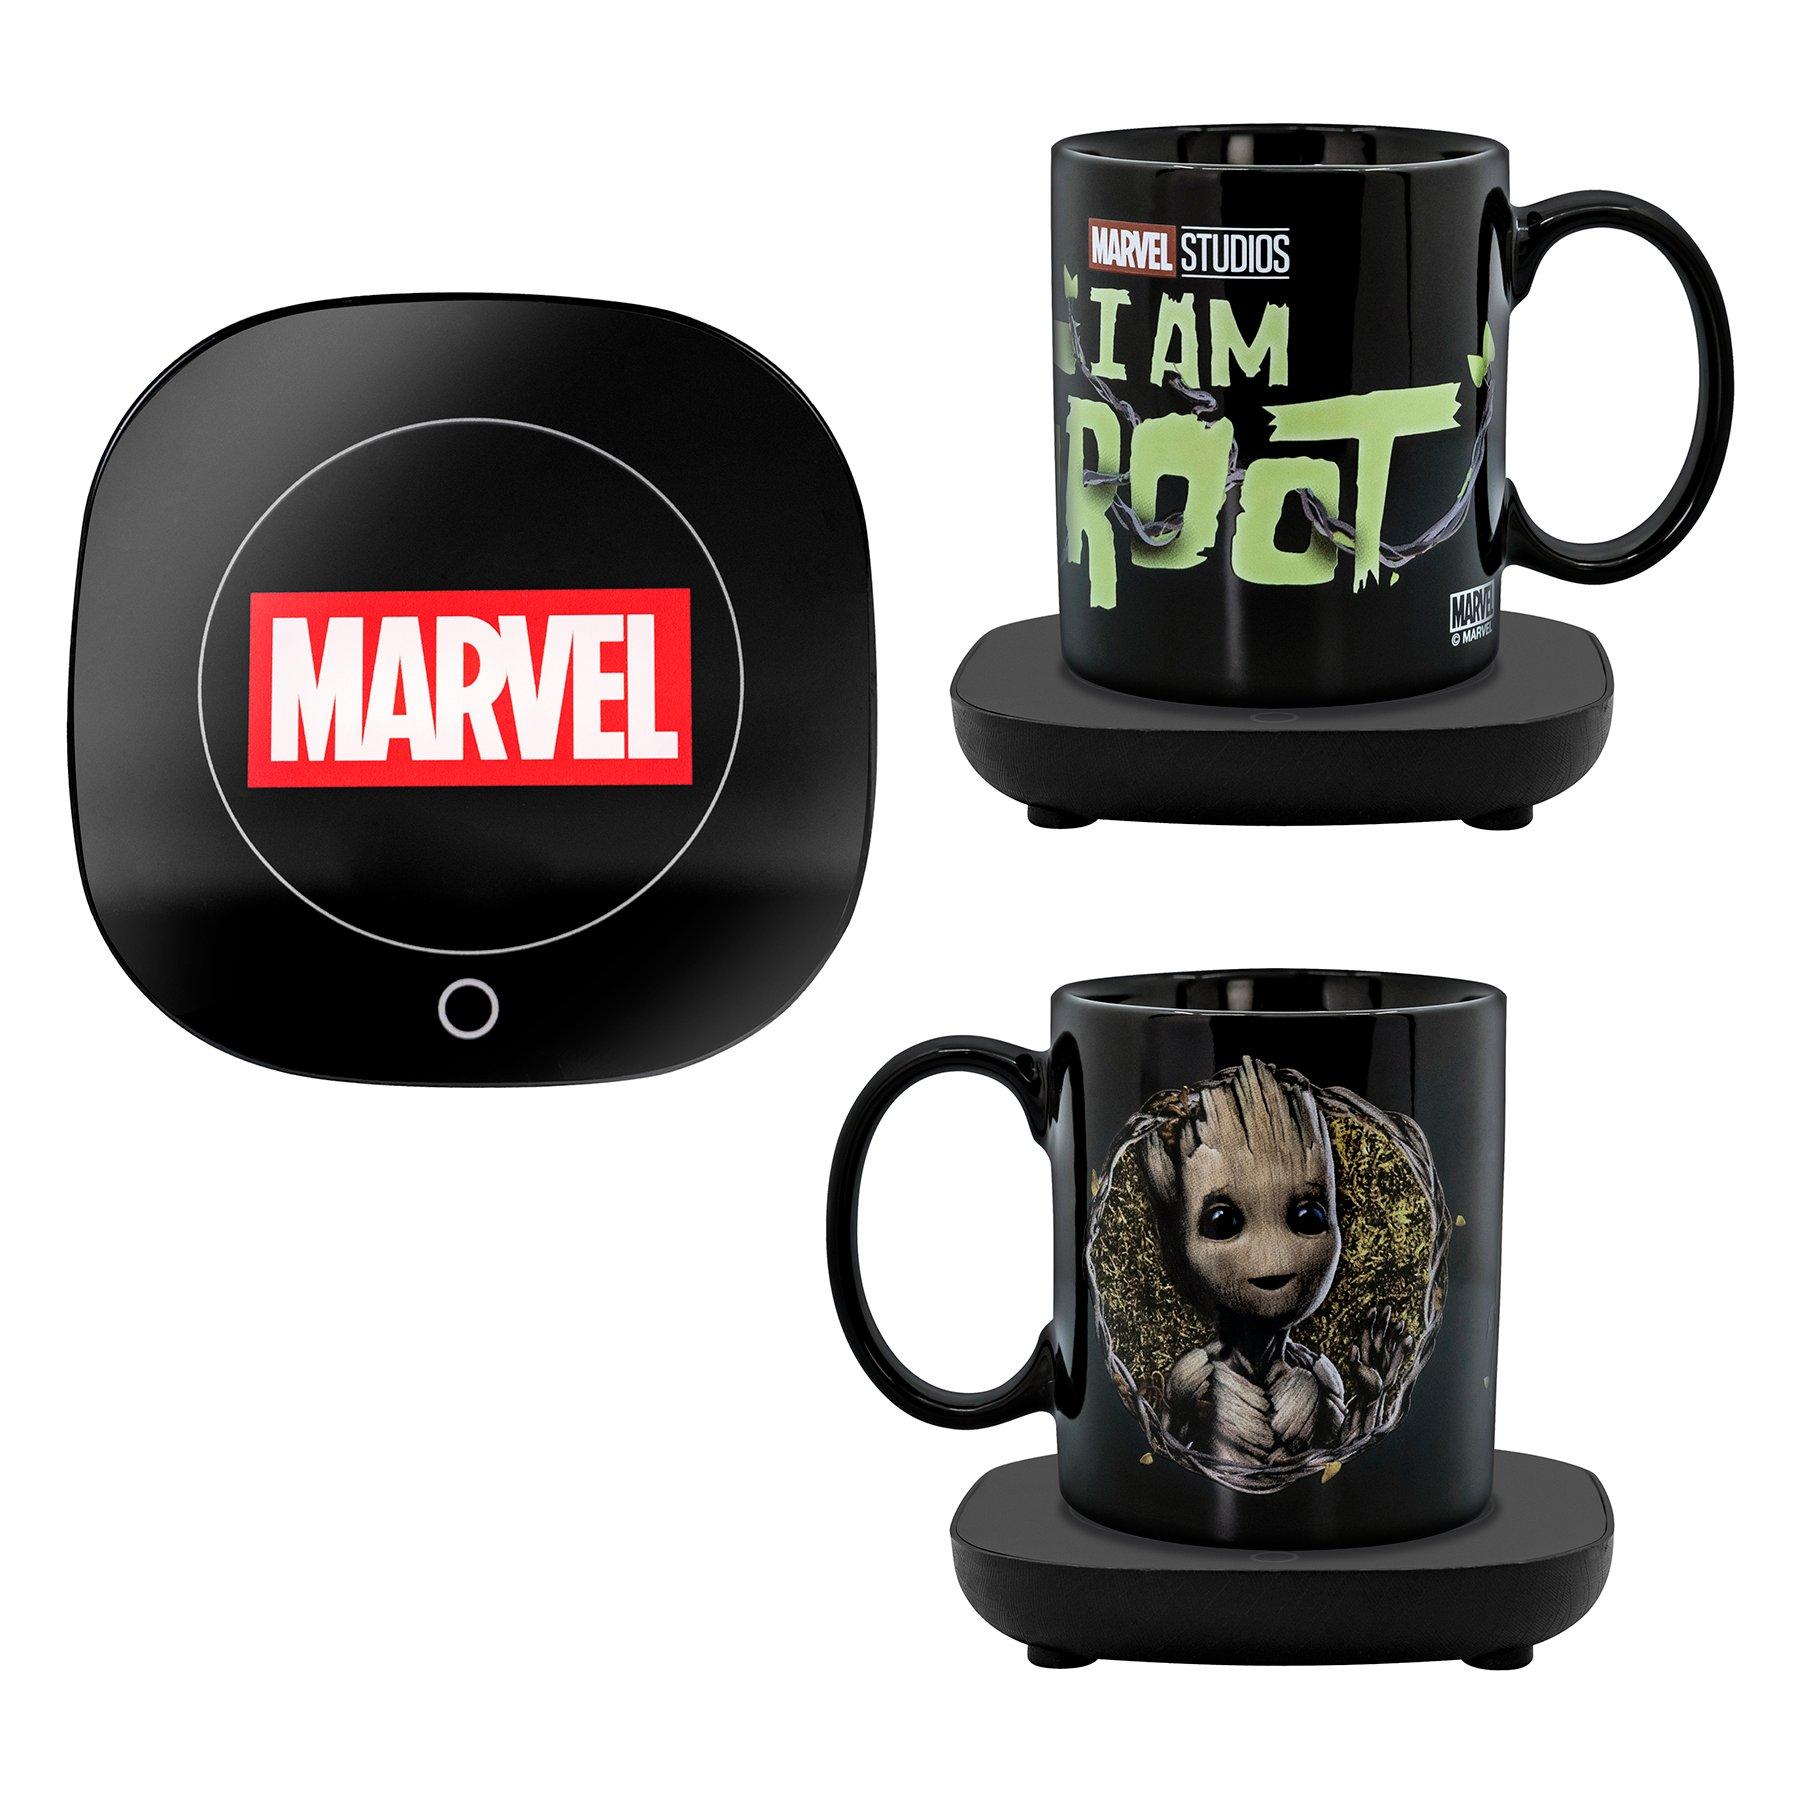 https://media.gamestop.com/i/gamestop/20005558/Marvels-I-Am-Groot-Mug-Warmer-with-Mug?$pdp$